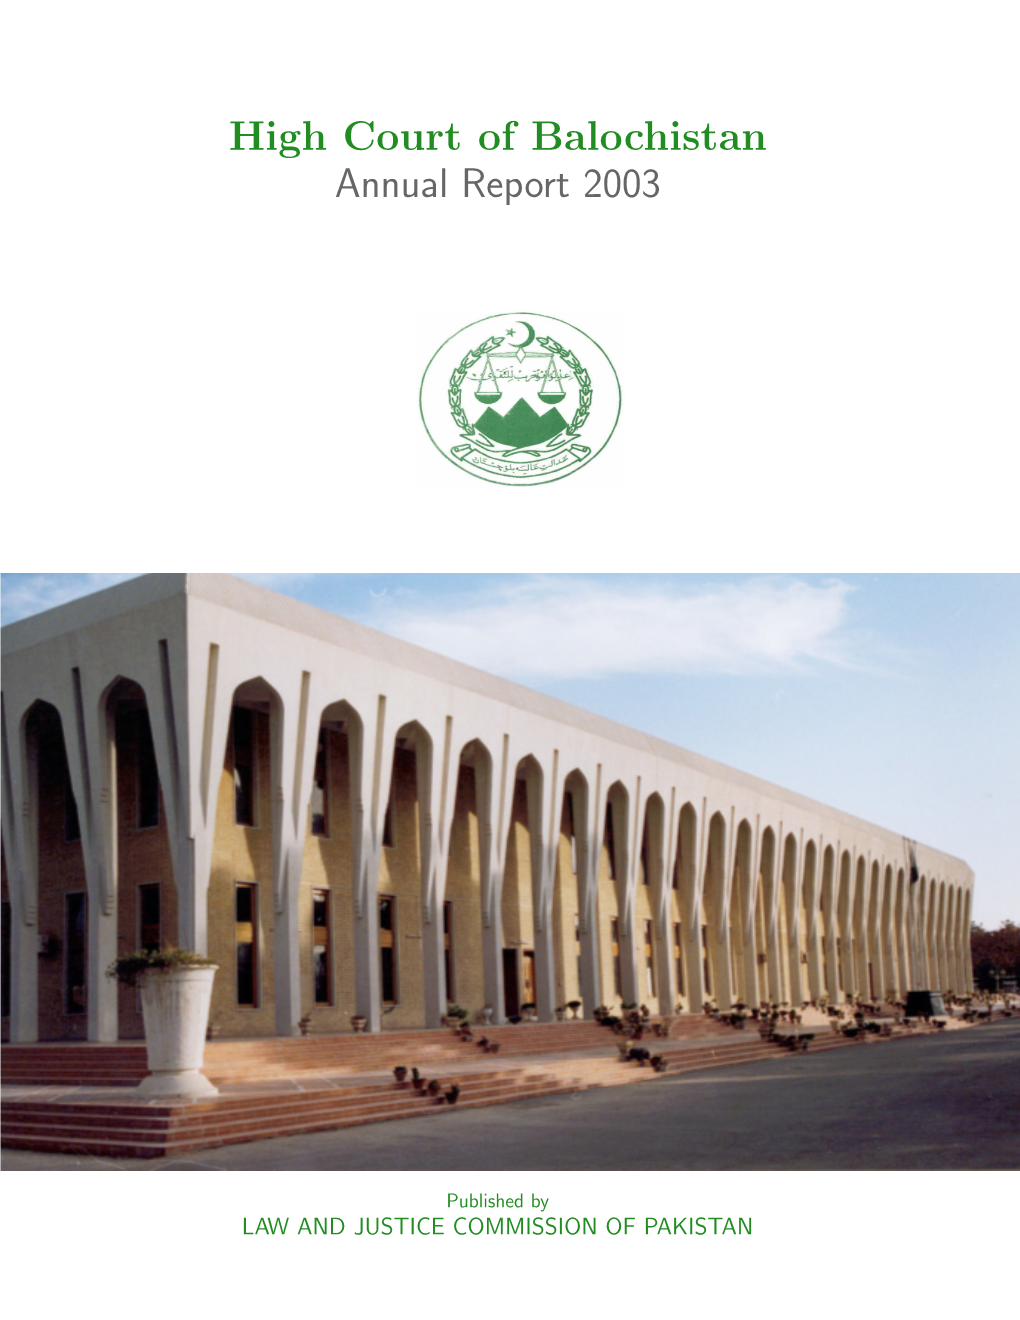 High Court of Balochistan Annual Report 2003